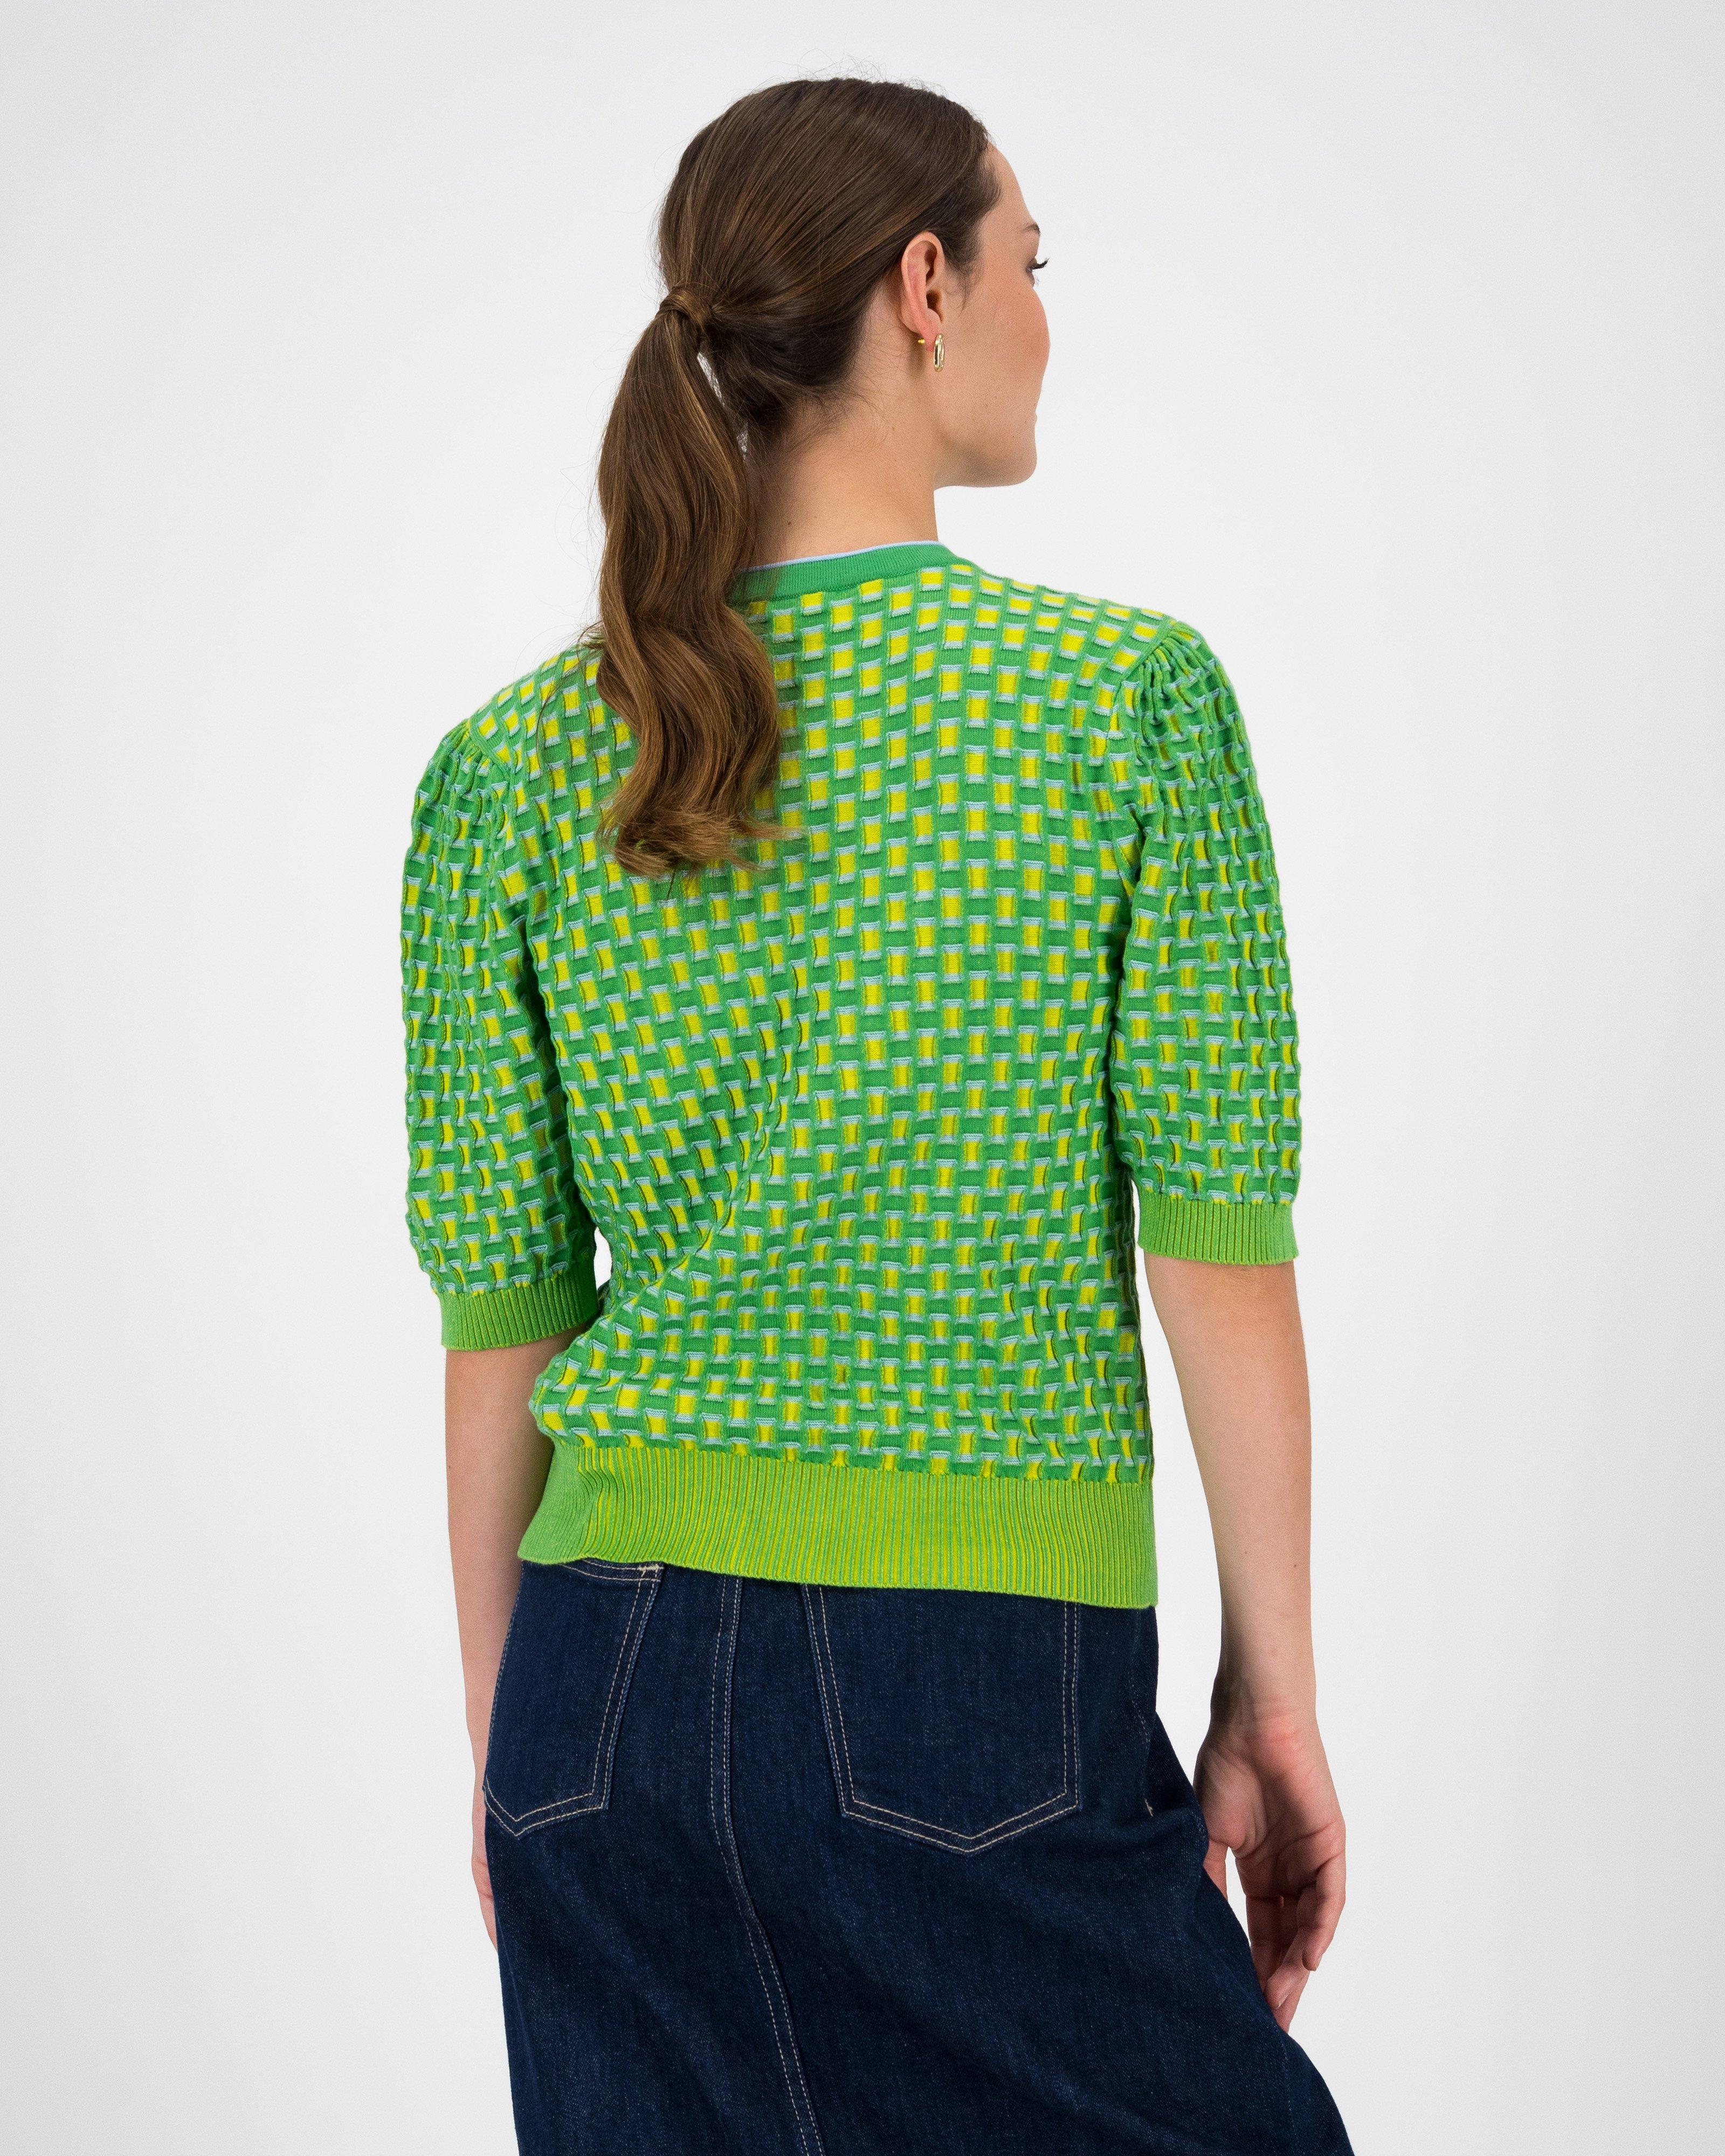 Joji Short Sleeve Knitwear Top -  Green